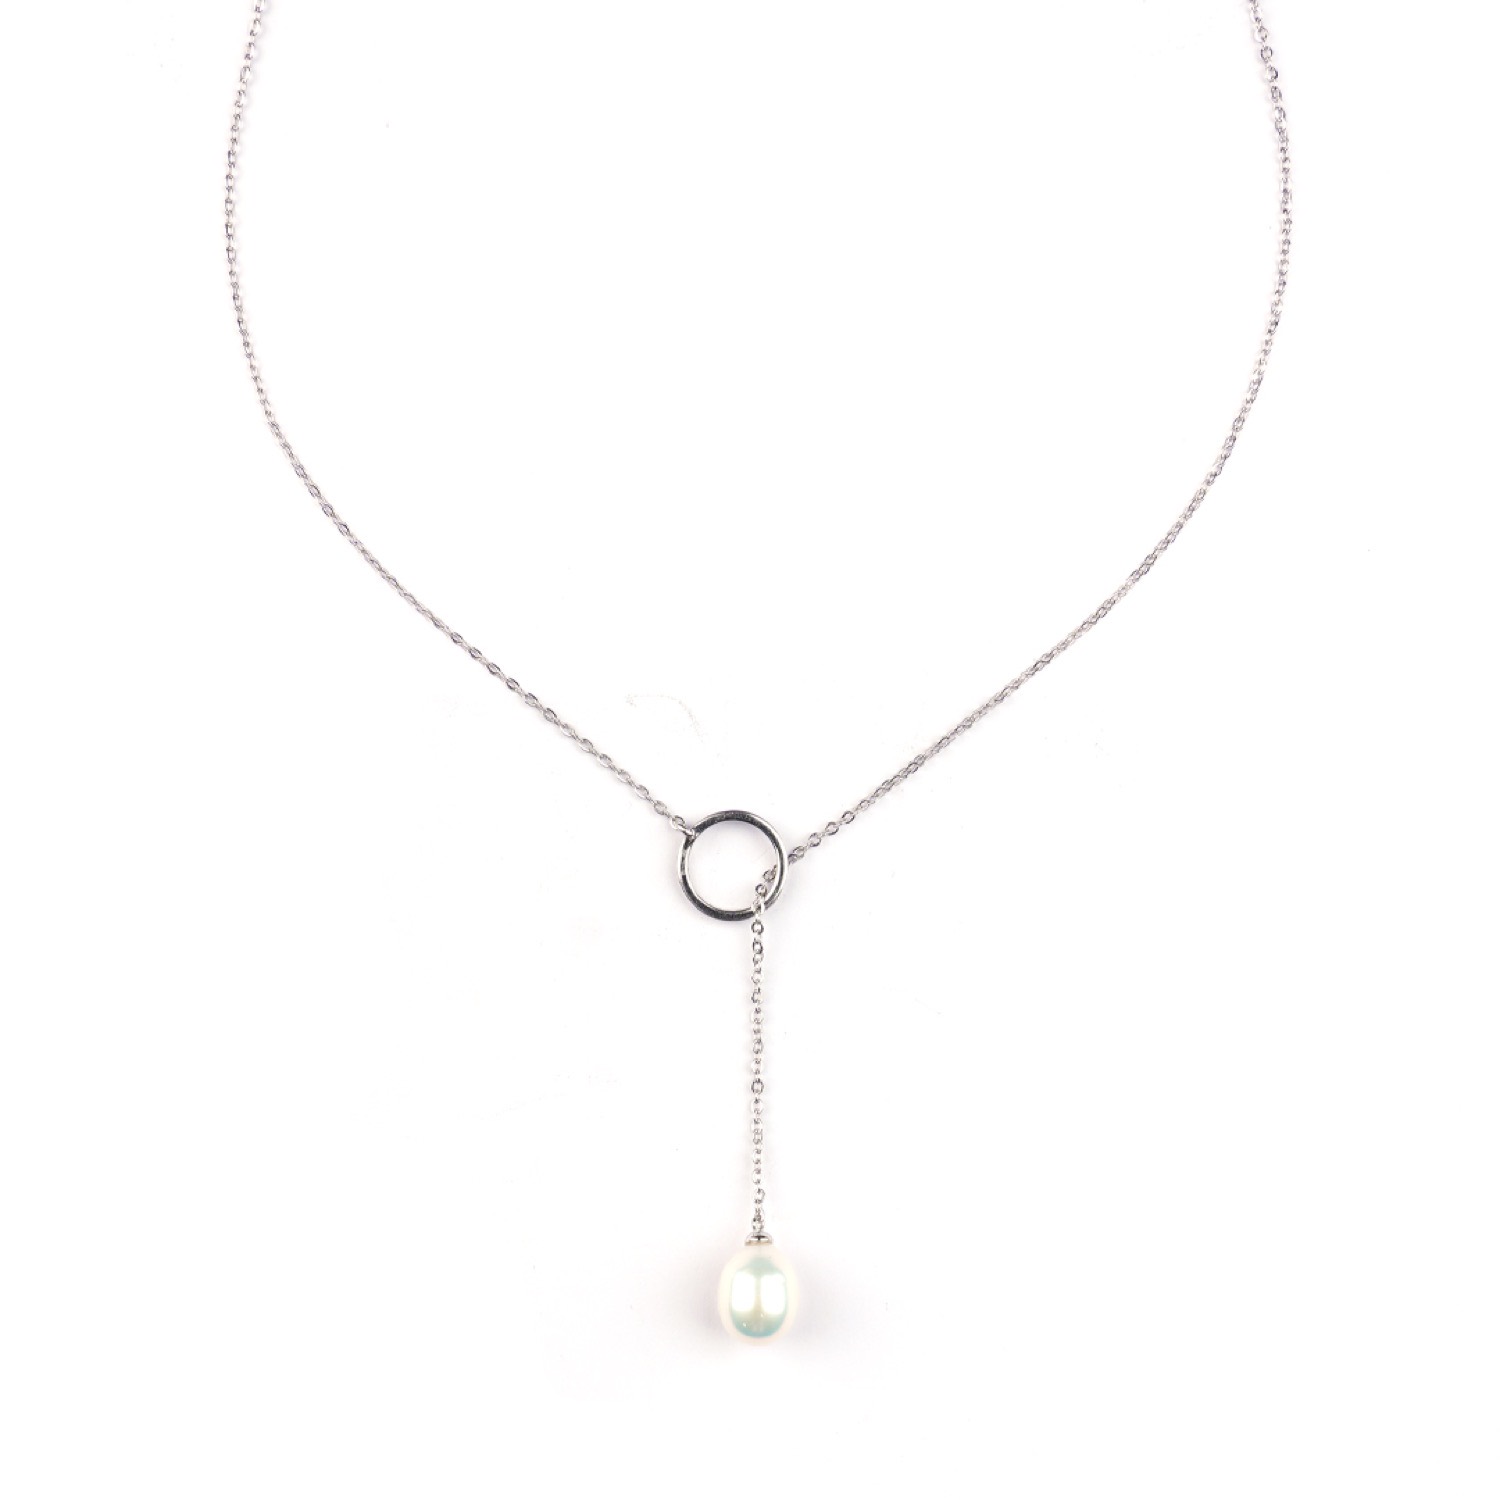 varam_chains_072022_white_pearl_pendant_silver_chain_1-1